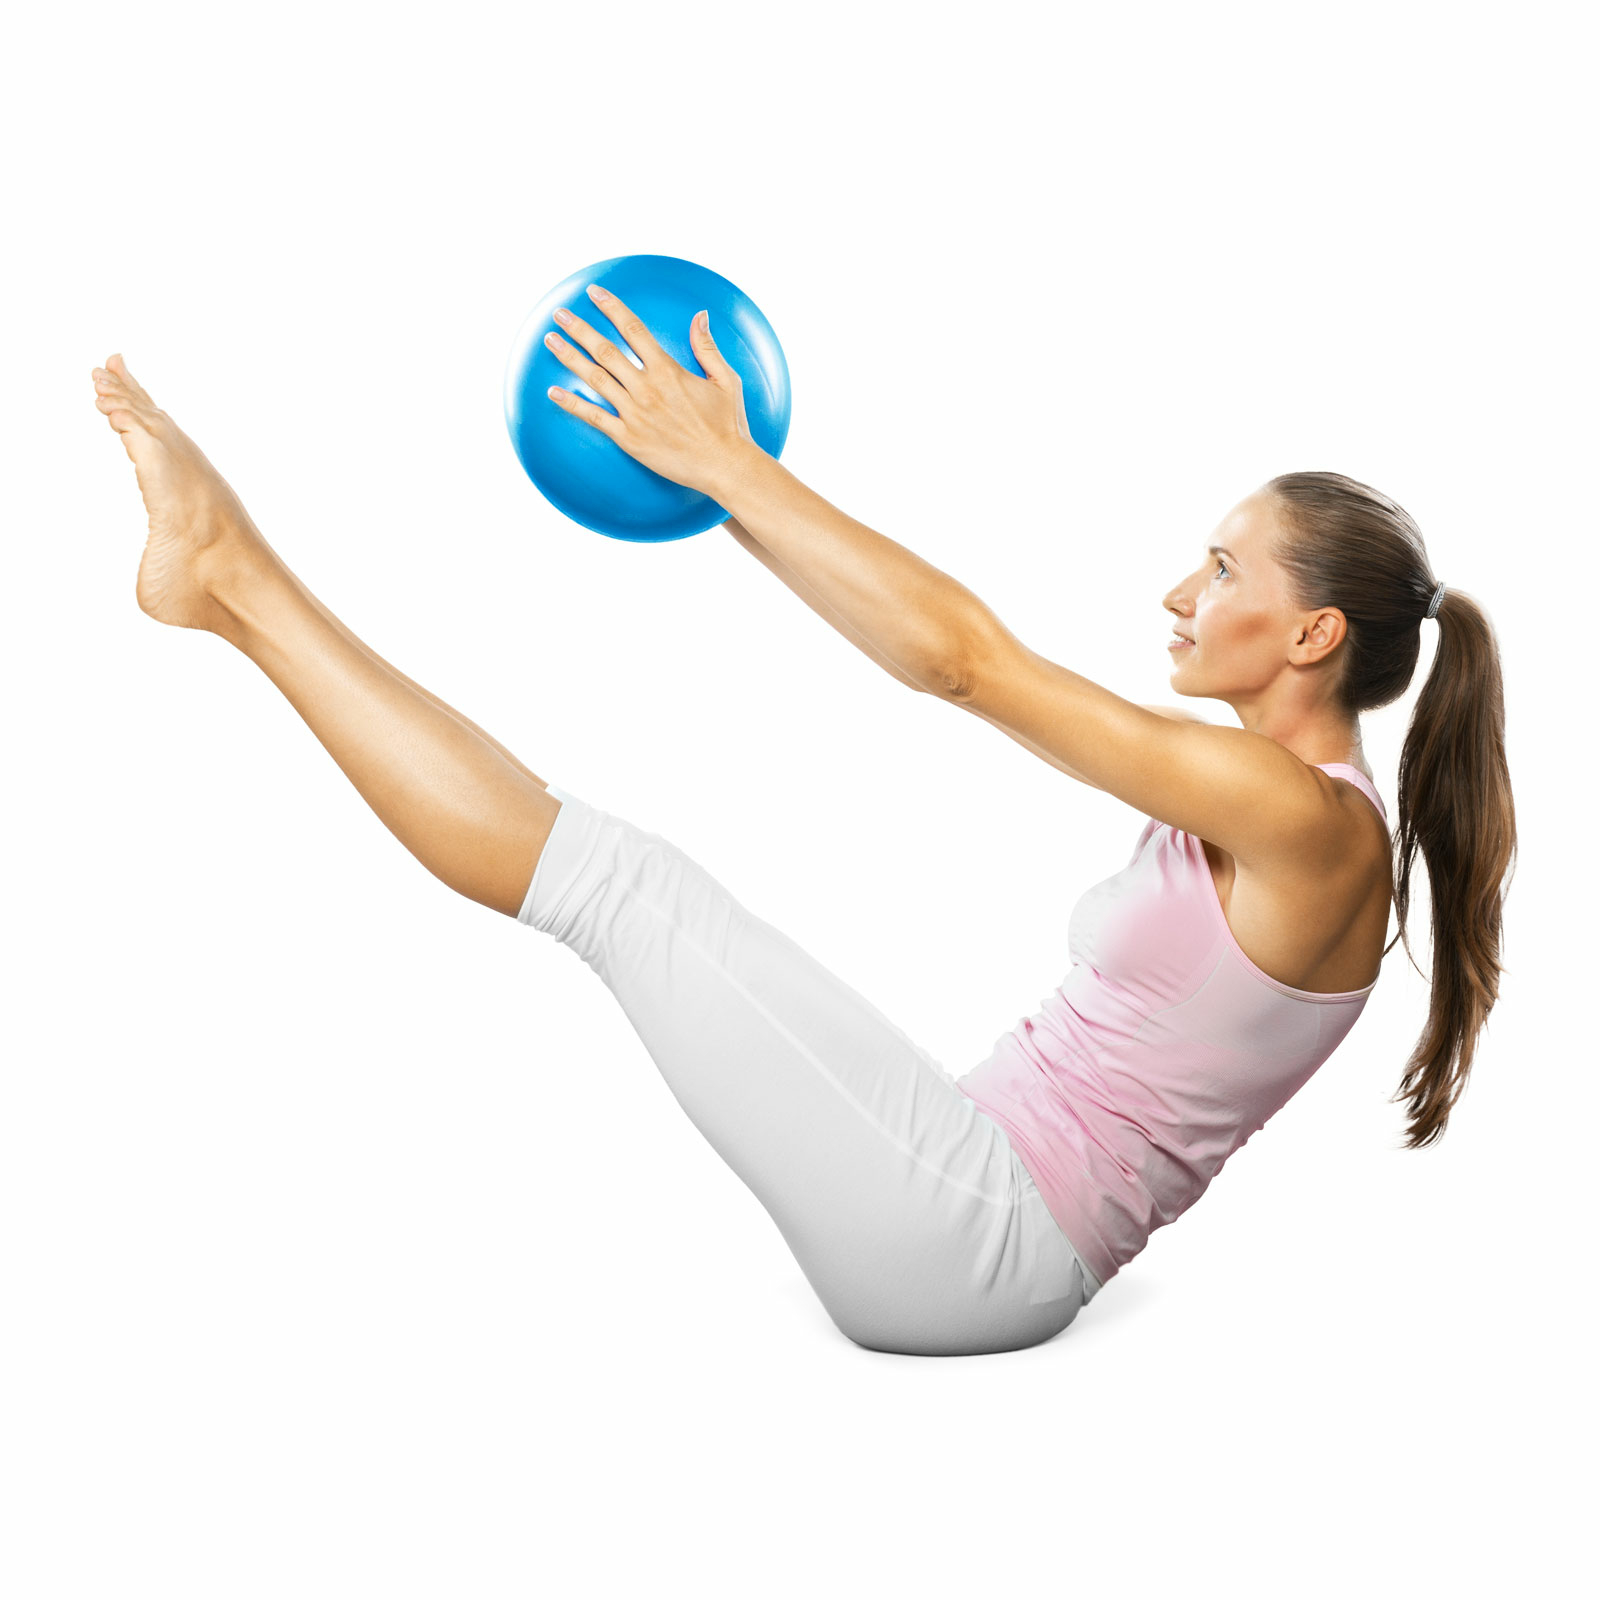 Ballon de fitness pour pratique du pilate yoga stretching gymnastique.